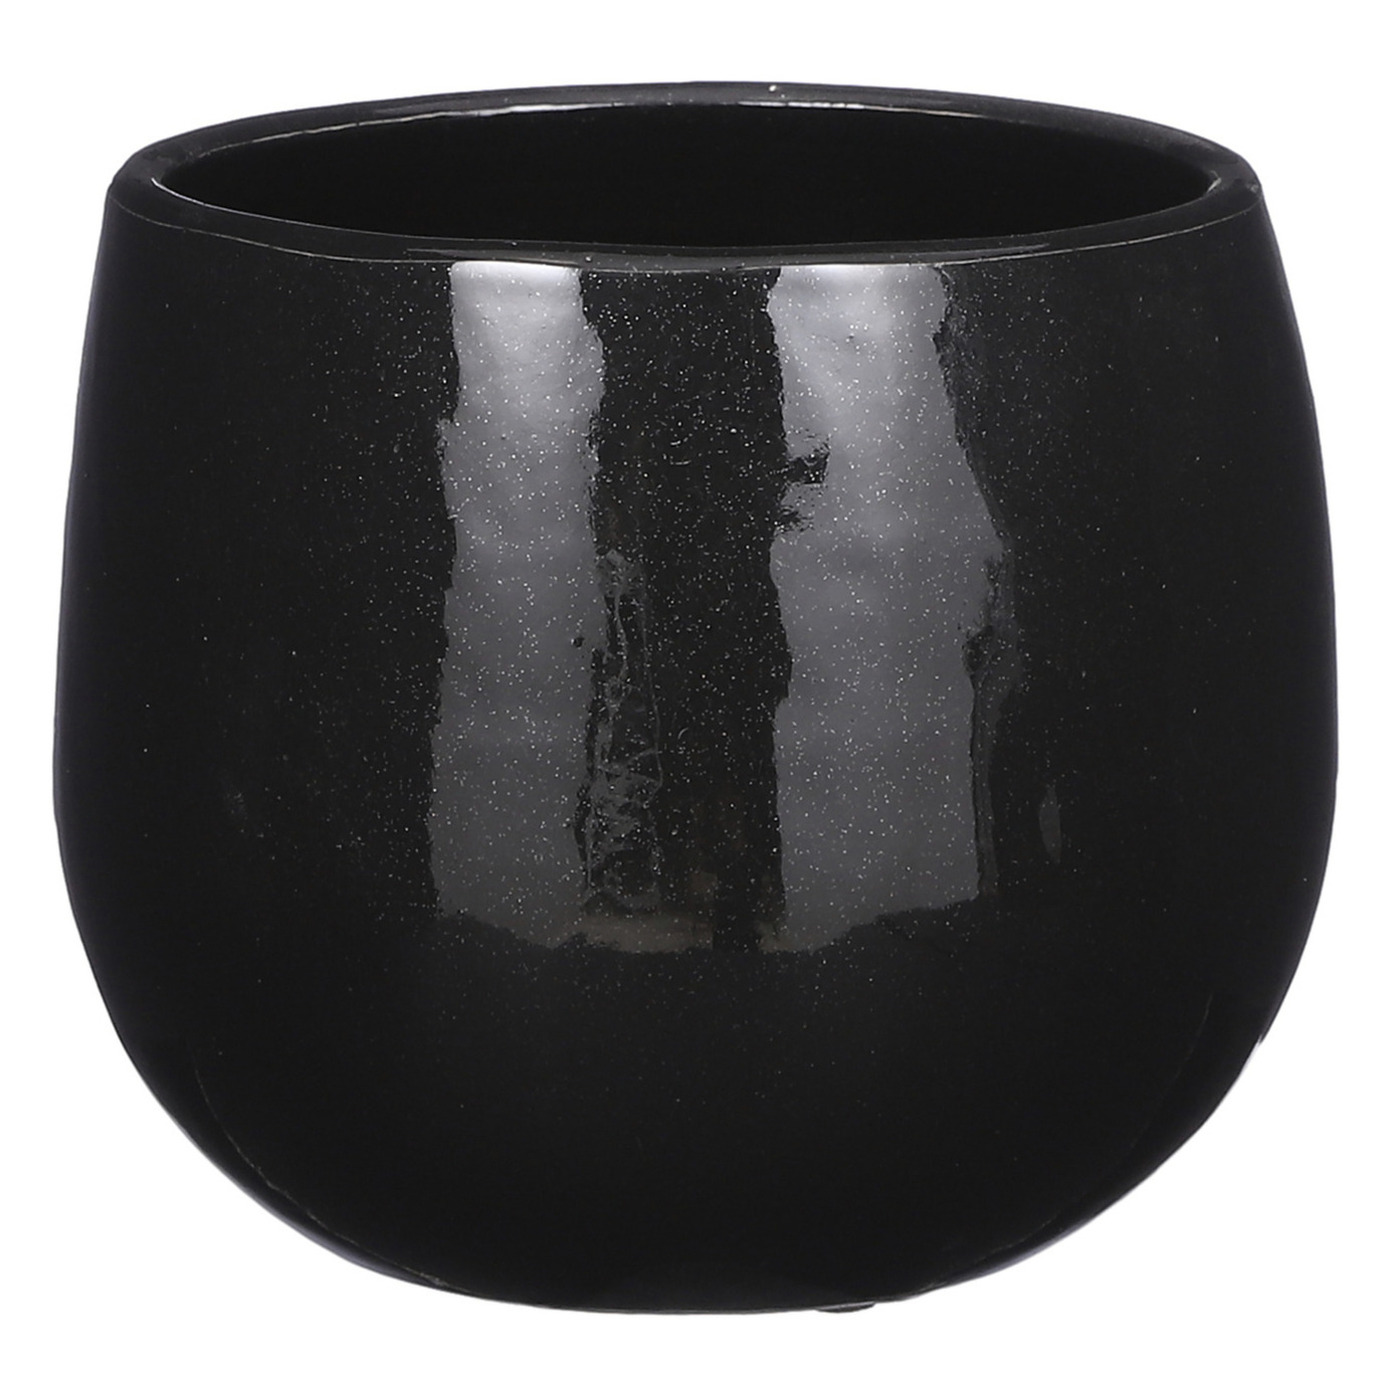 Plantenpot-bloempot keramiek zwart speels licht gevlekt patroon D16-H14 cm